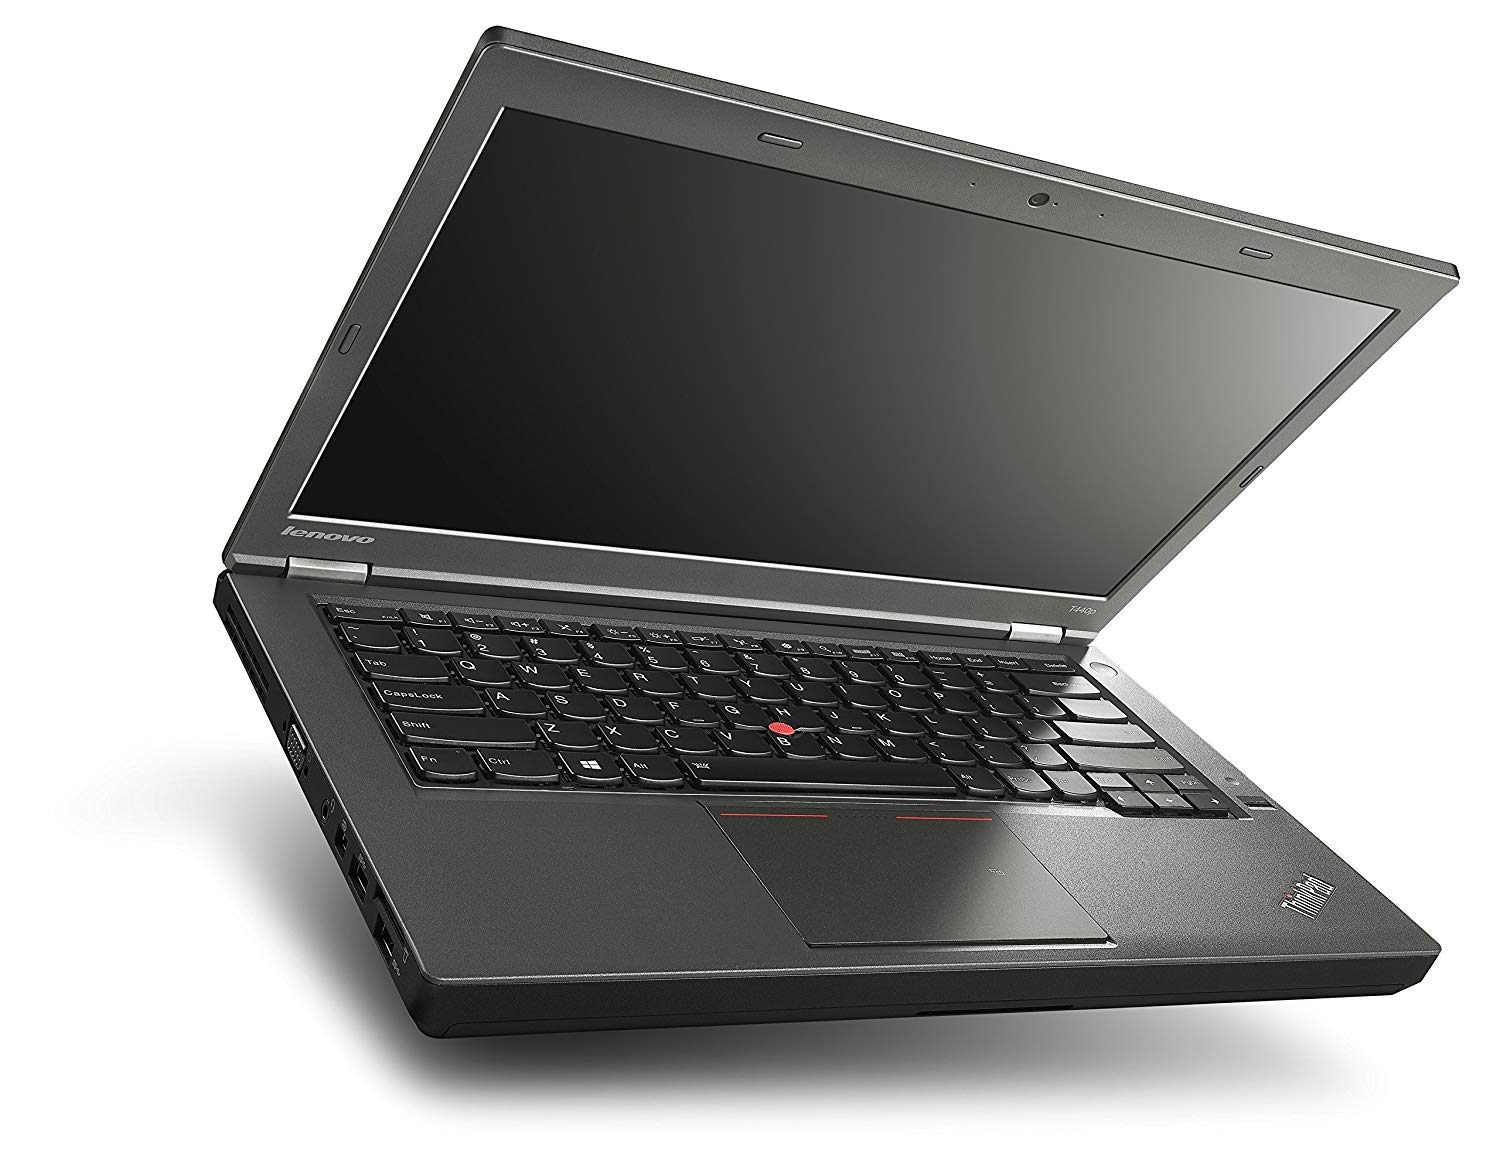 Refurbished Lenovo ThinkPad T440P i7 Laptop, 4th Gen, 8GB Ram, 256GB SSD